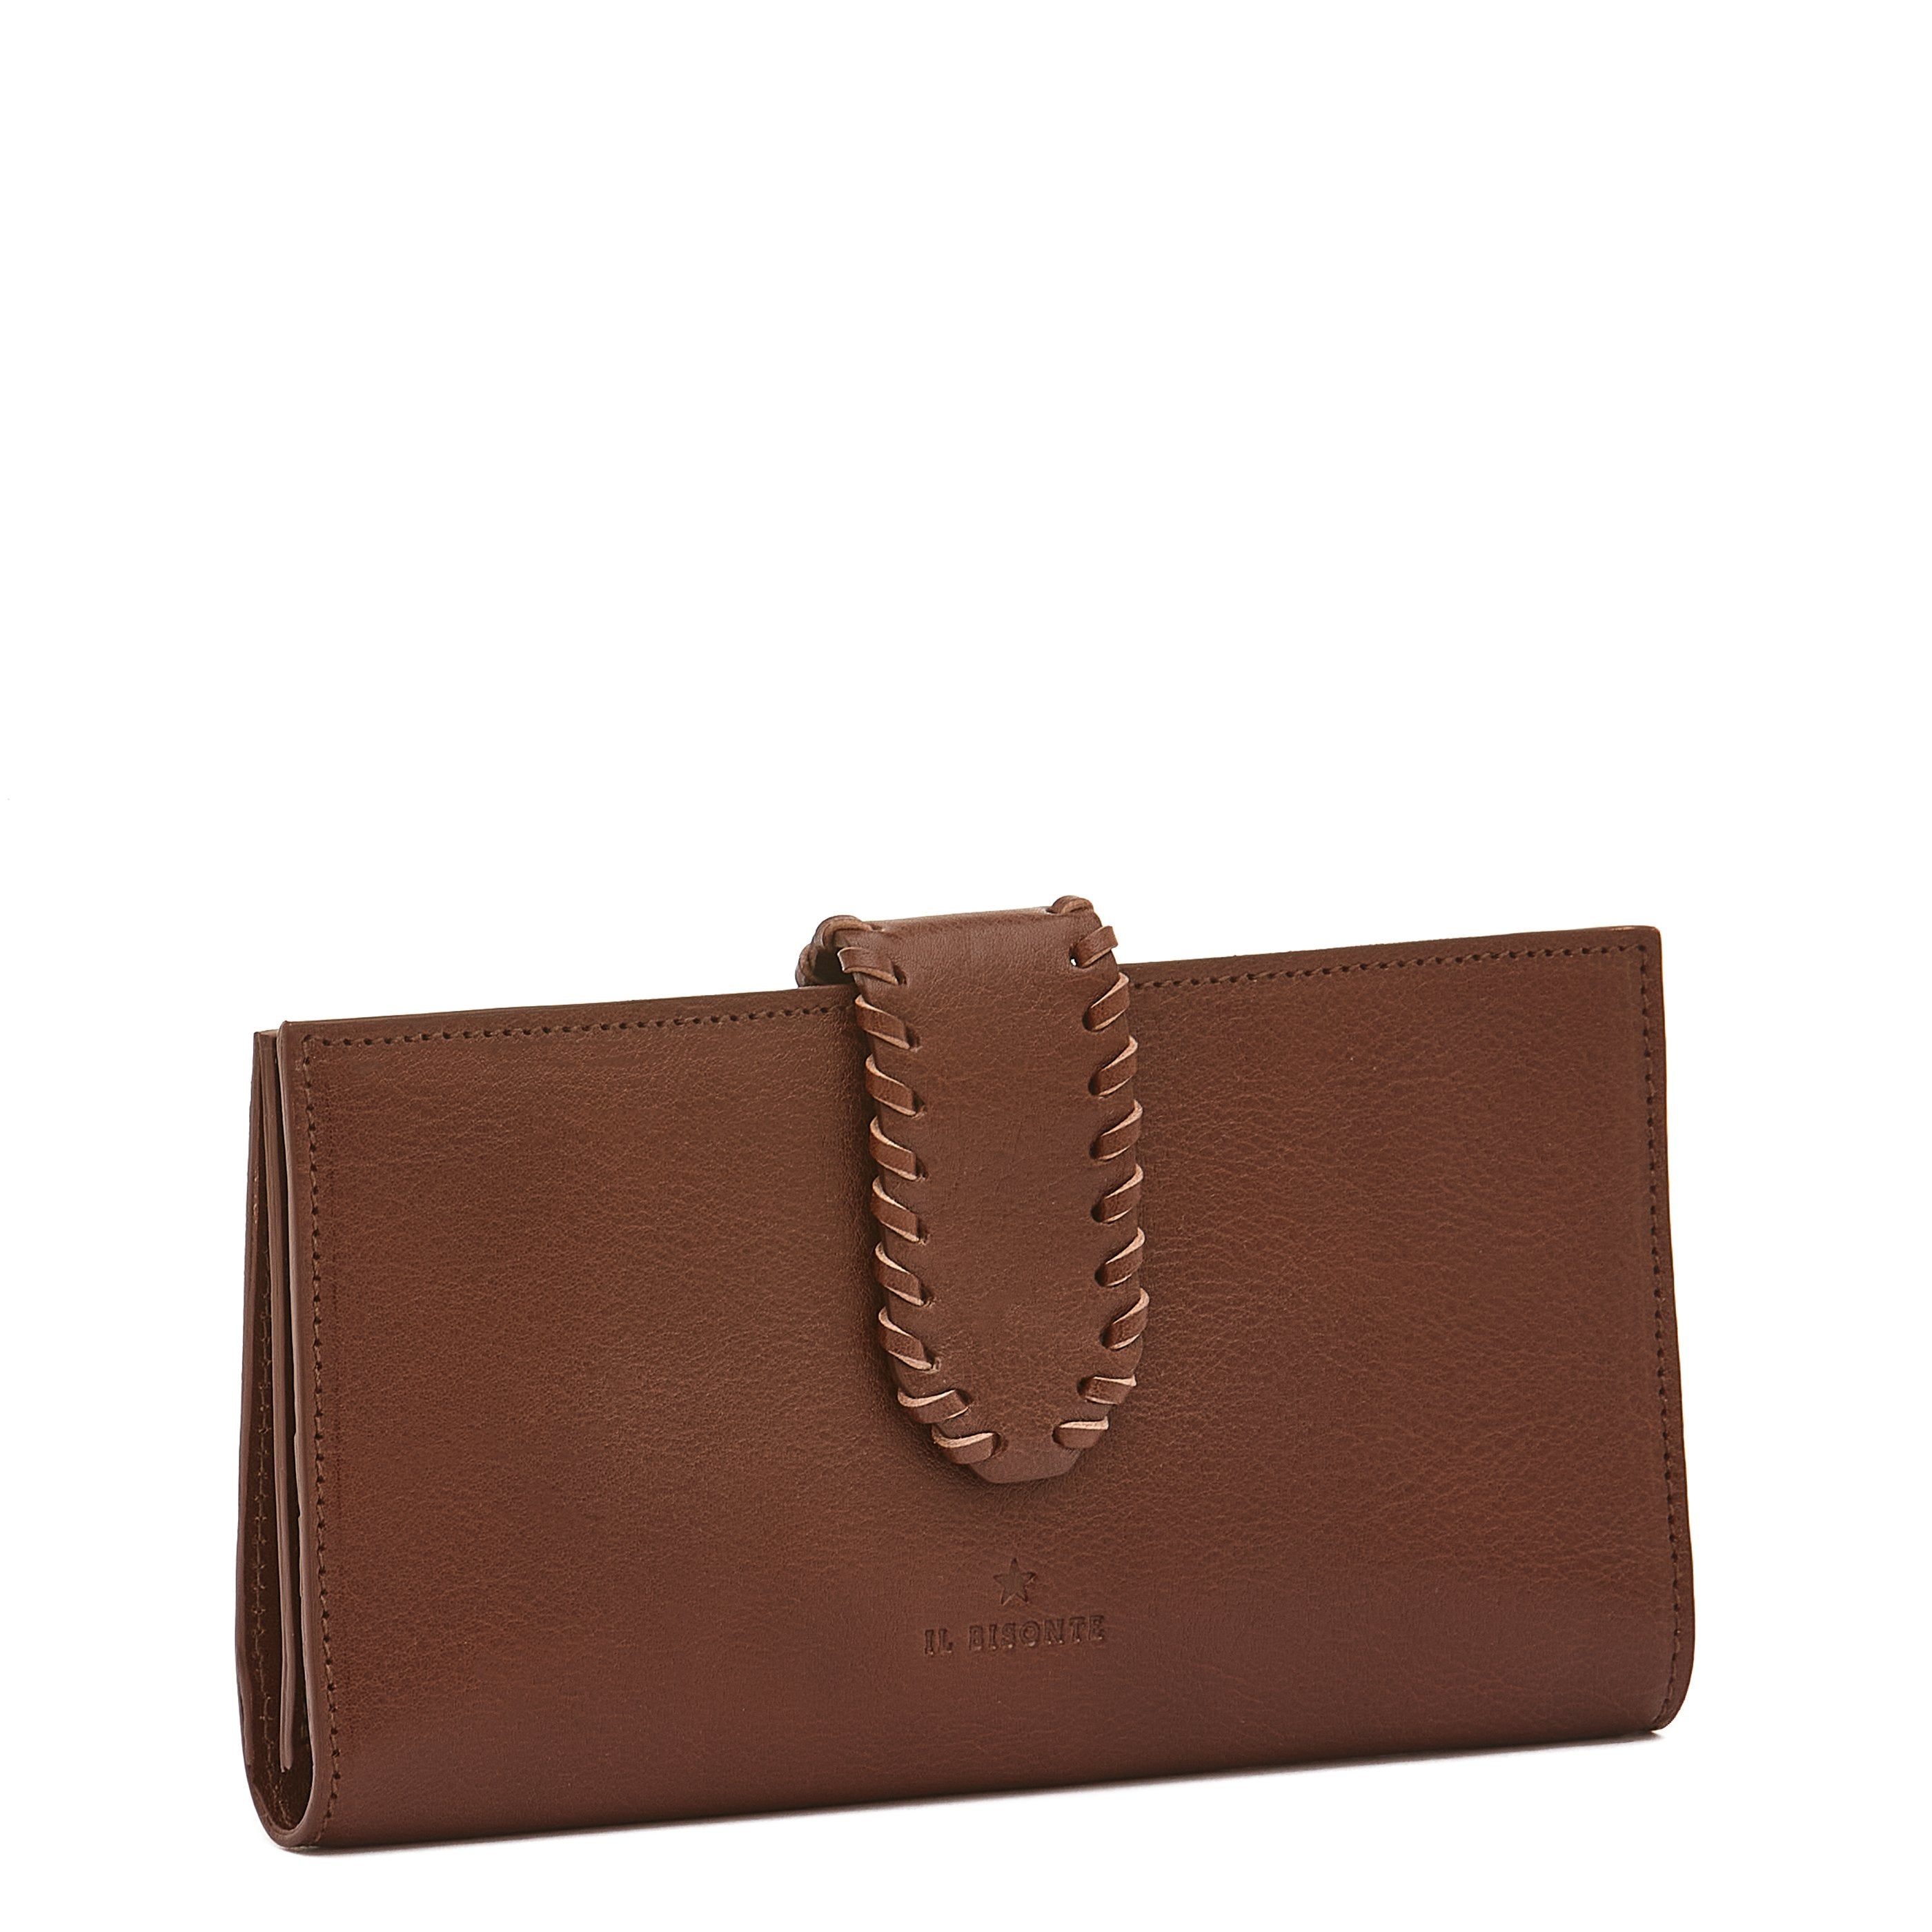 La fiaba | Women's continental wallet in leather color arabica